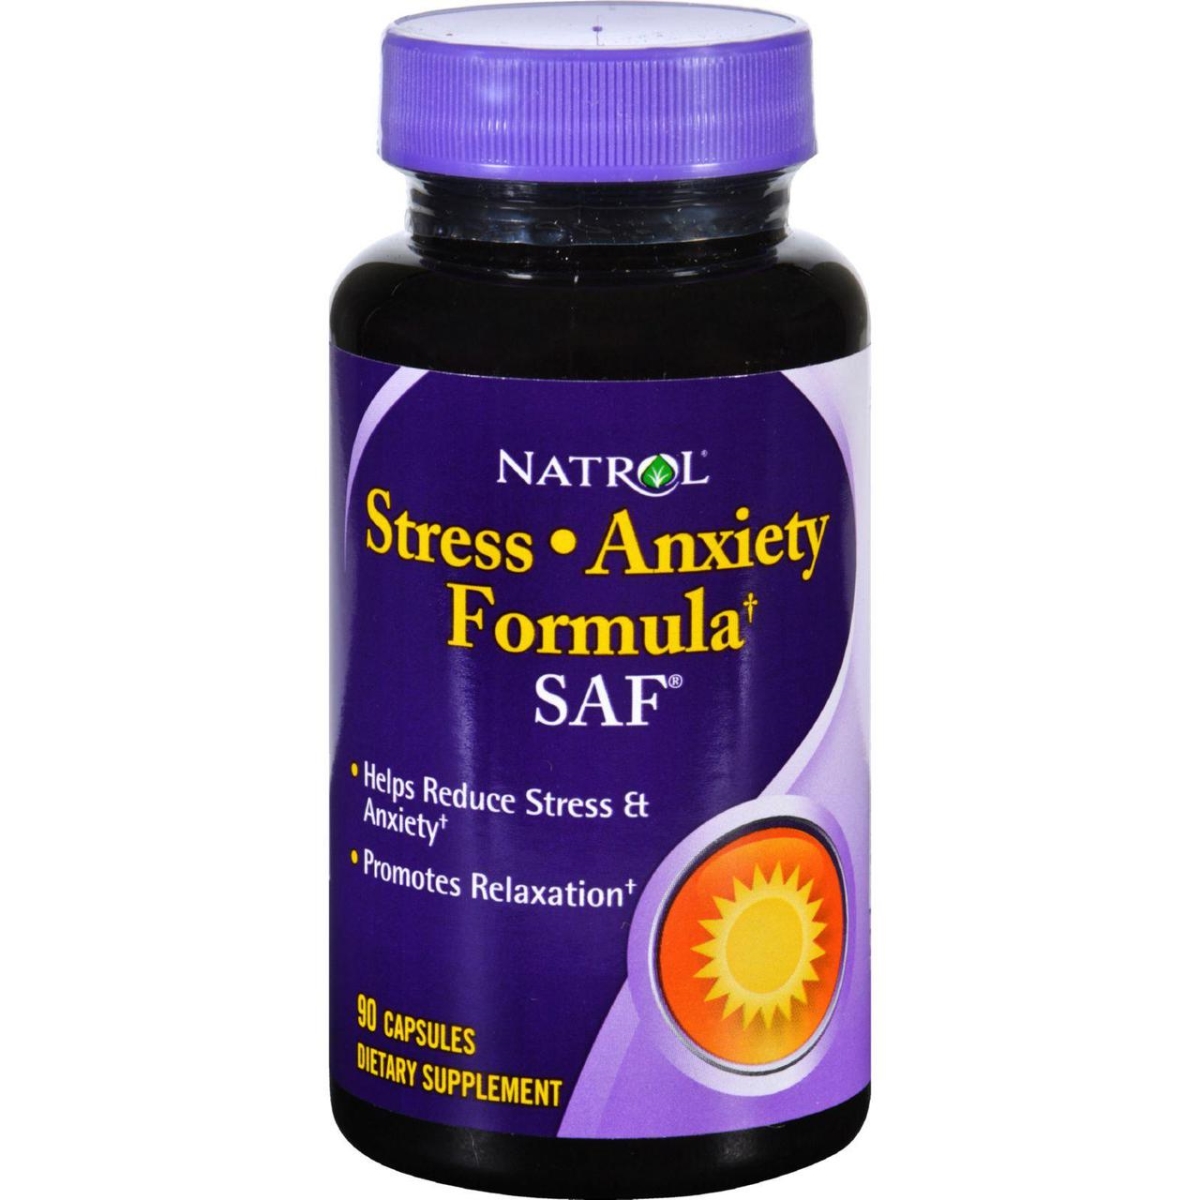 Hg0190686 Saf Stress & Anxiety Formula, 90 Capsules